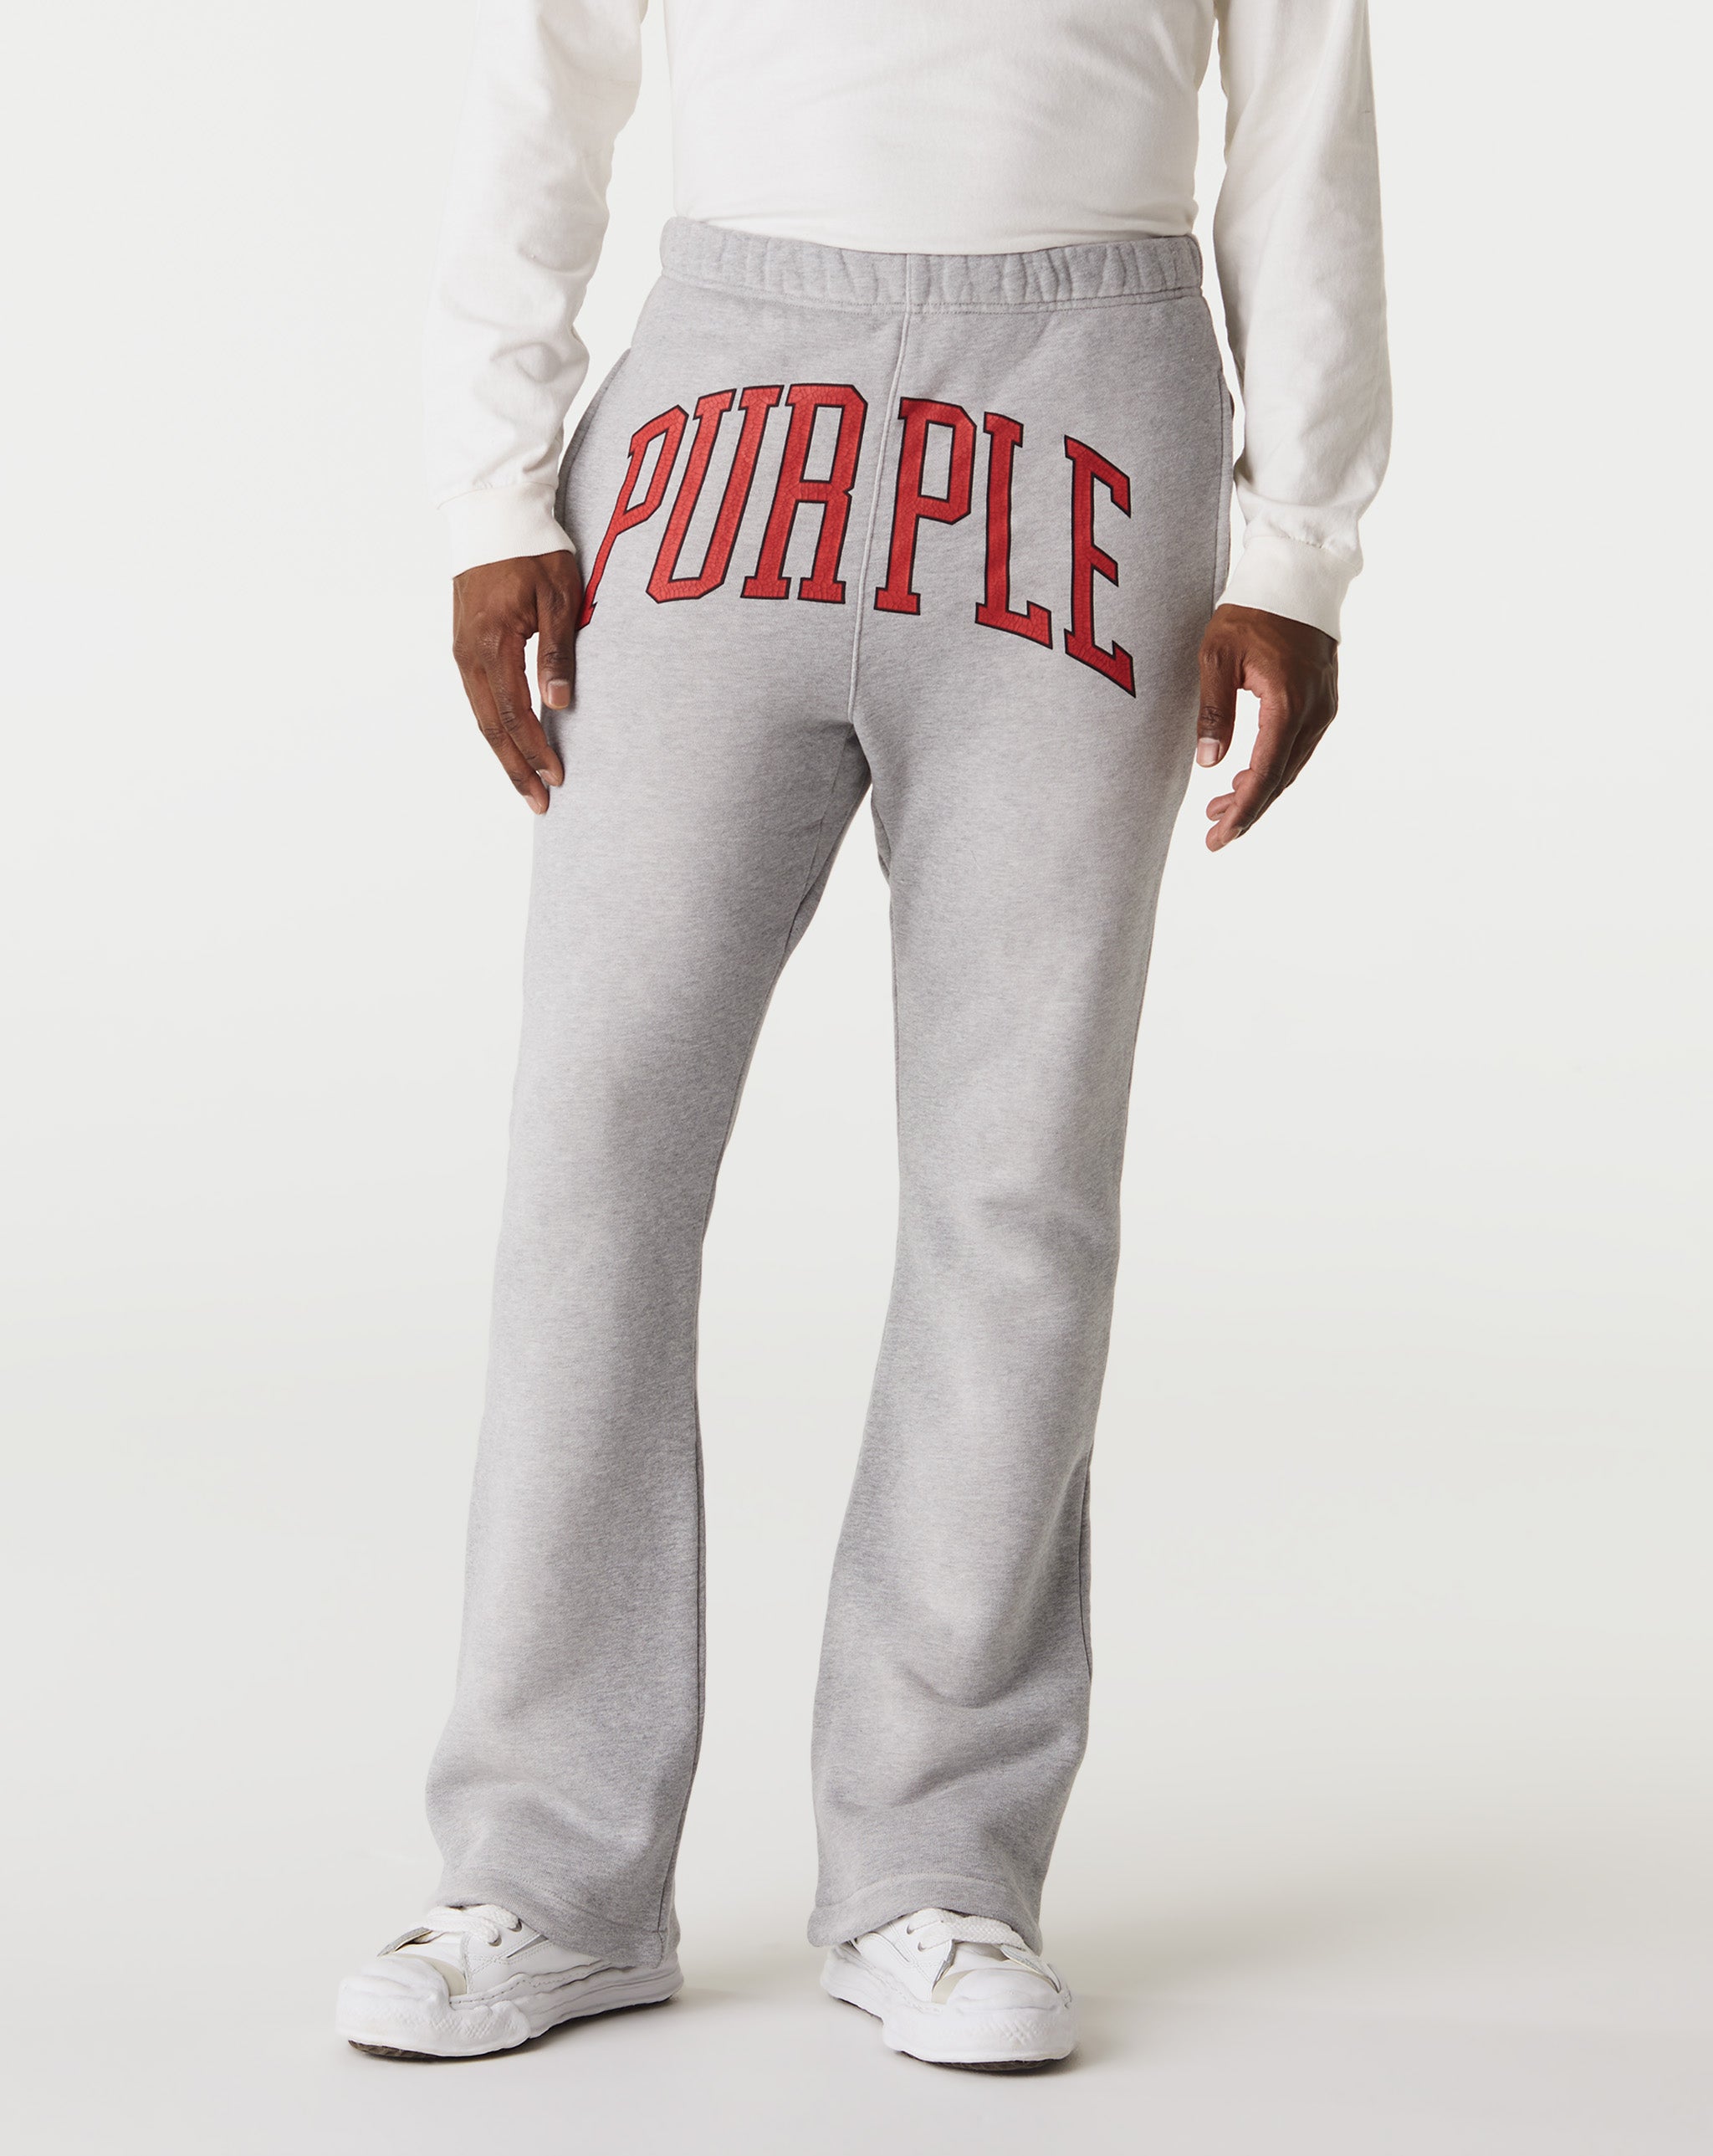 Purple Brand Heavyweight Fleece Flared Pants  - XHIBITION